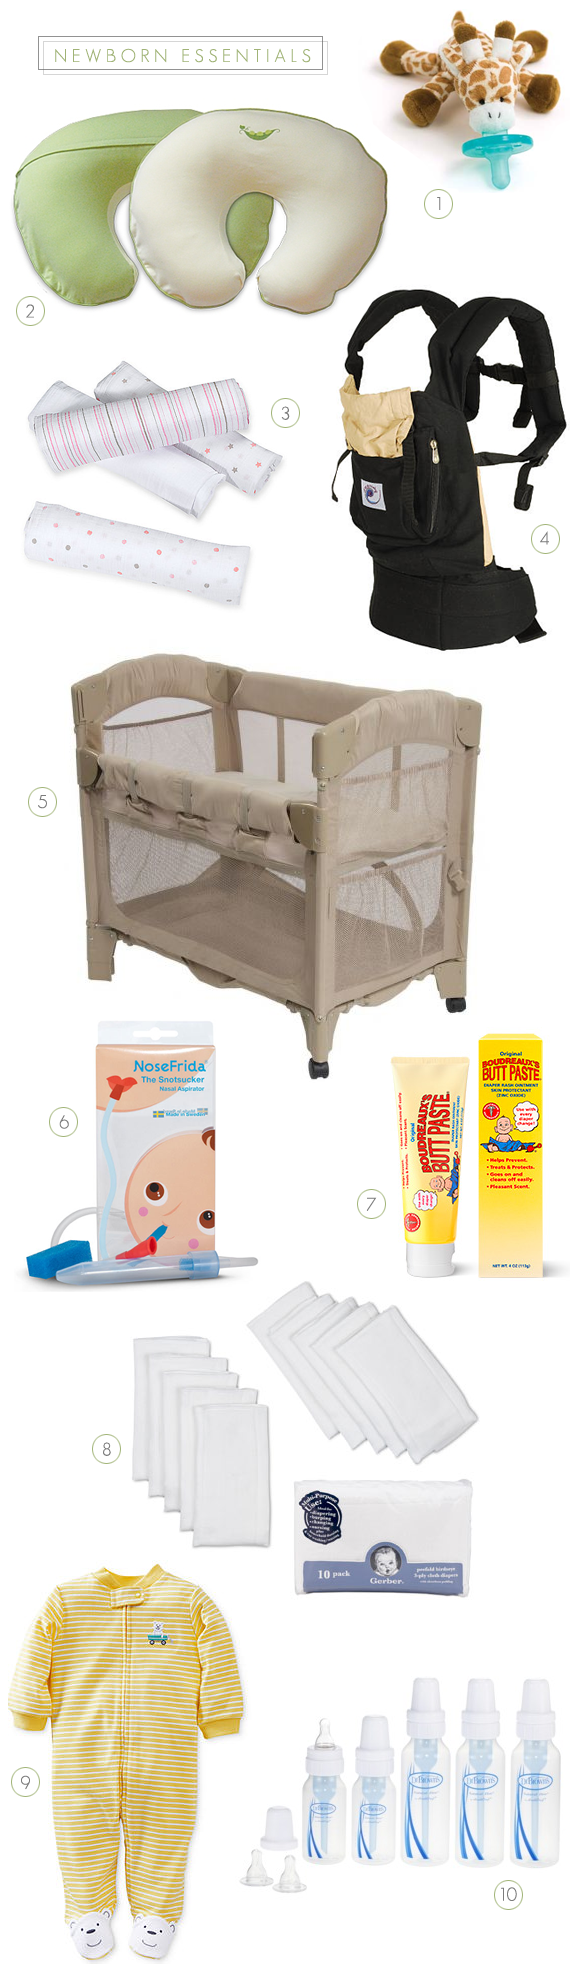 10 Essential Newborn Products